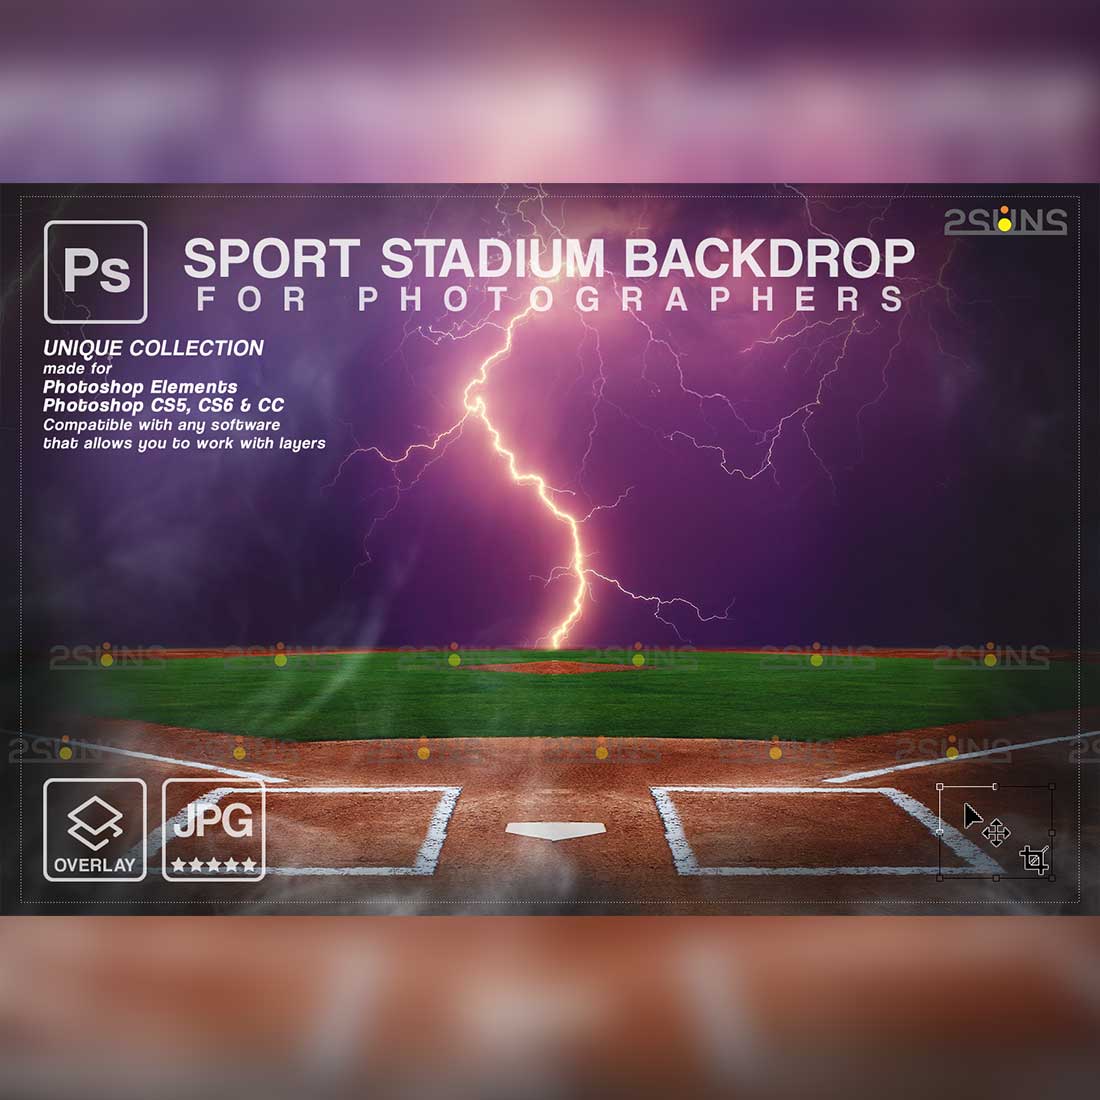 Baseball Amazing Backdrop Sports Digital Photoshop Overlay Preview Image.